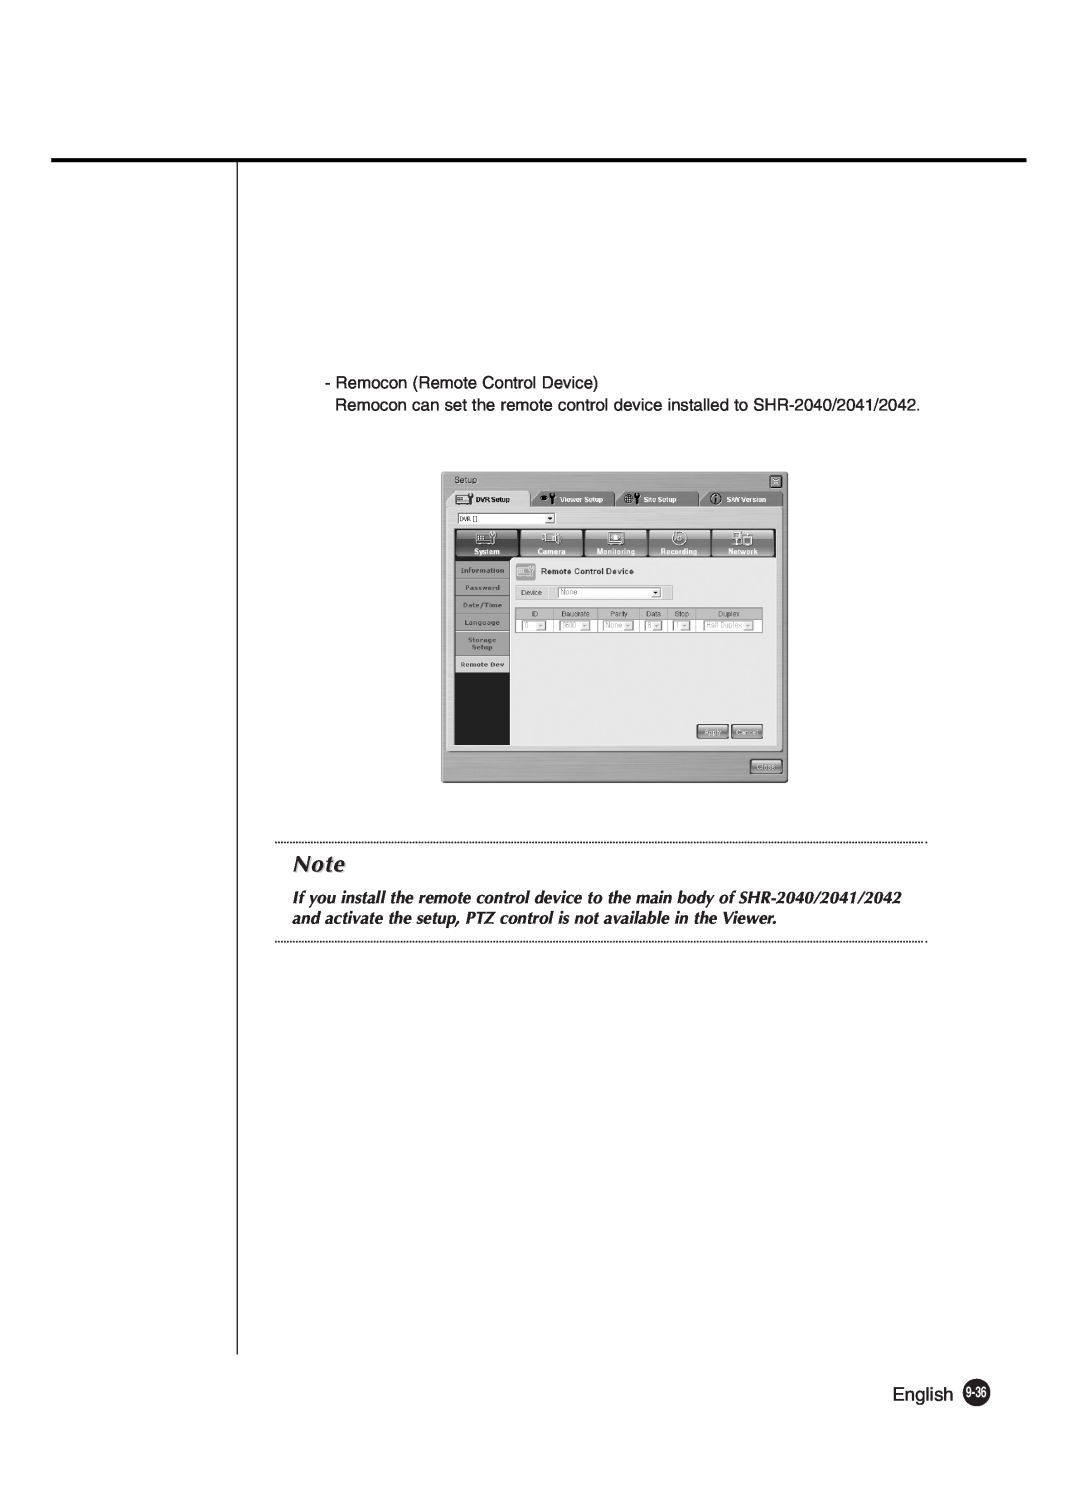 Samsung SHR-2040P250, SHR-2042P250 manual Remocon Remote Control Device 